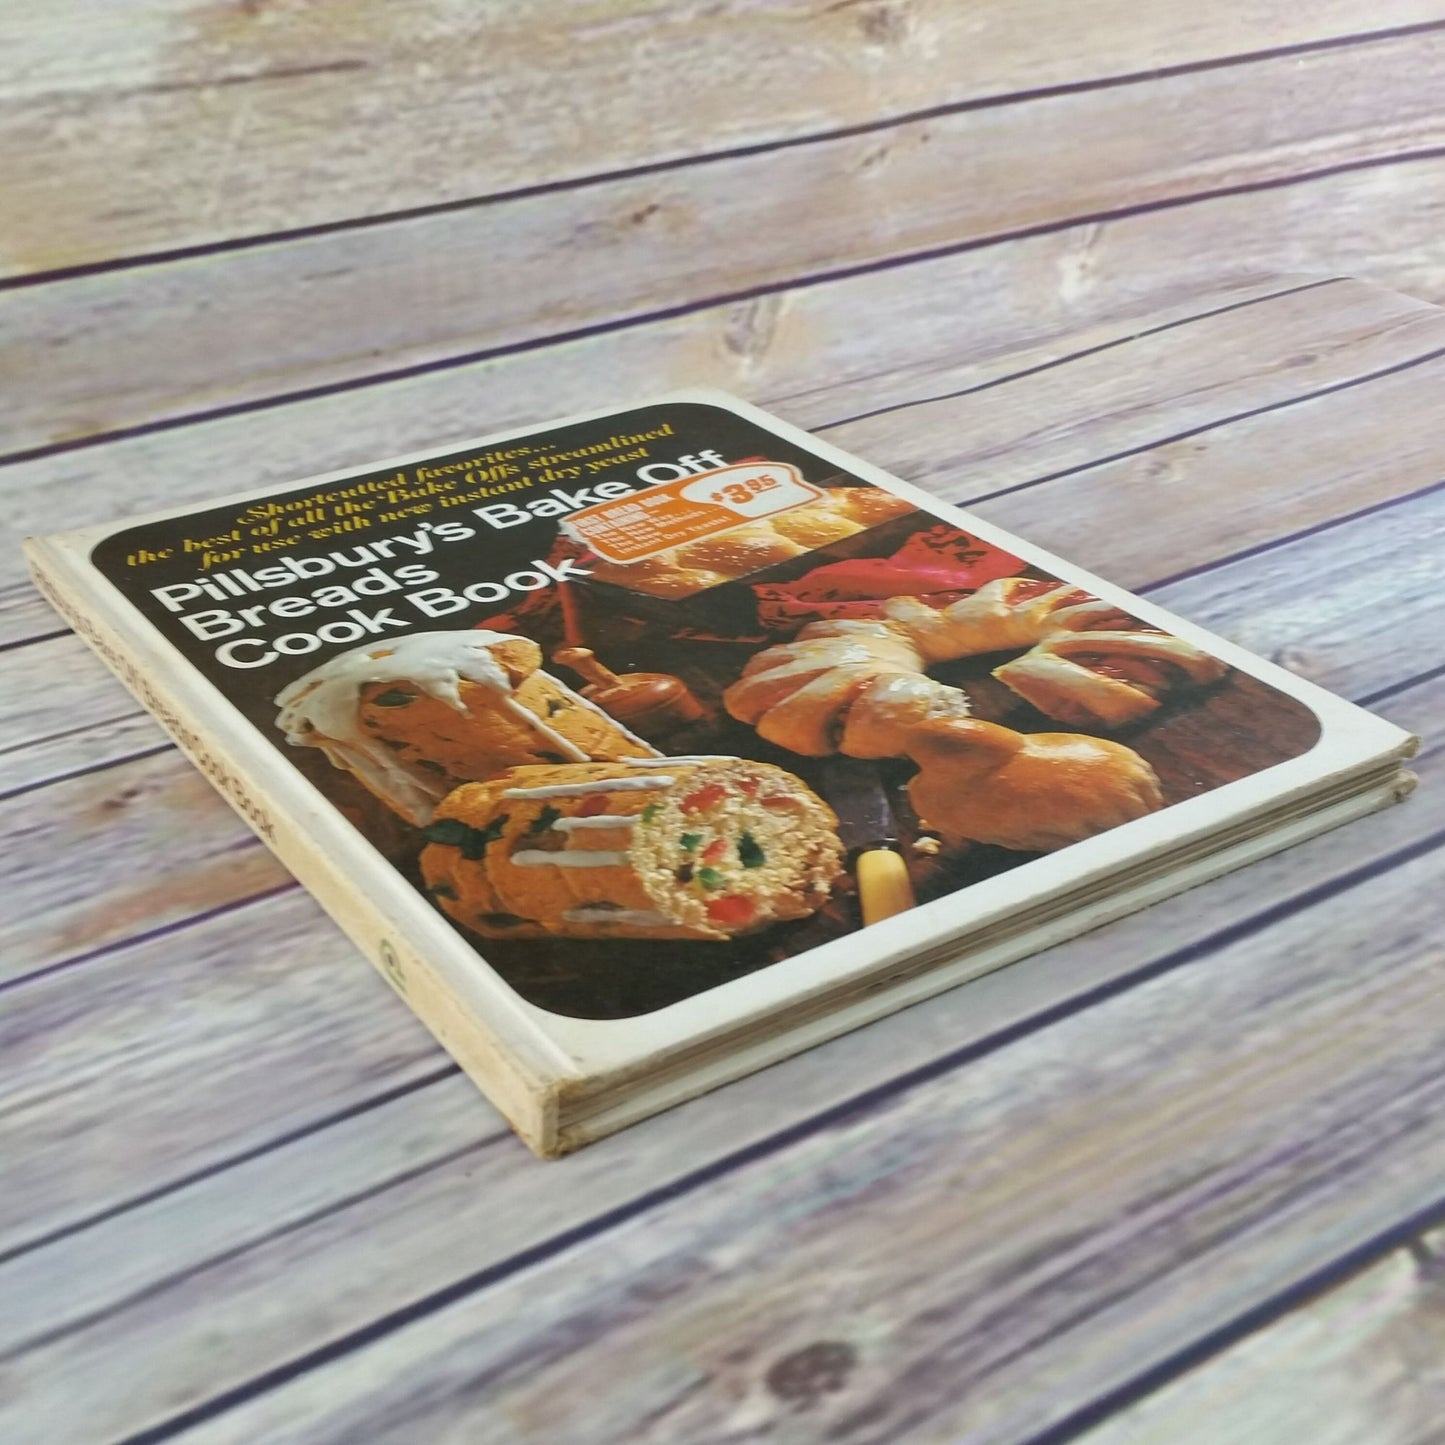 Vintage Cookbook Pillsbury's Bake Off Breads Cook Book Recipes Hardcover 1968 Prize Winning Favorites